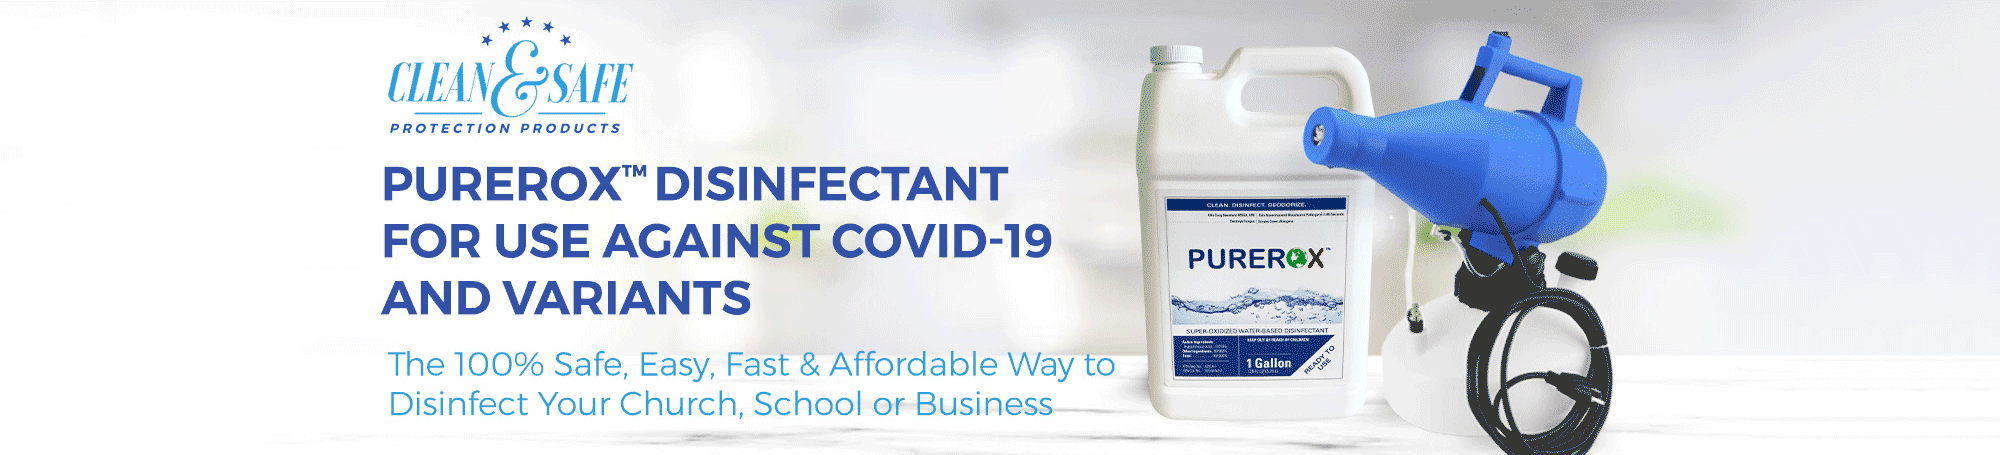 Purerox Covid-19 Disinfectant kills viruses in just 60 seconds